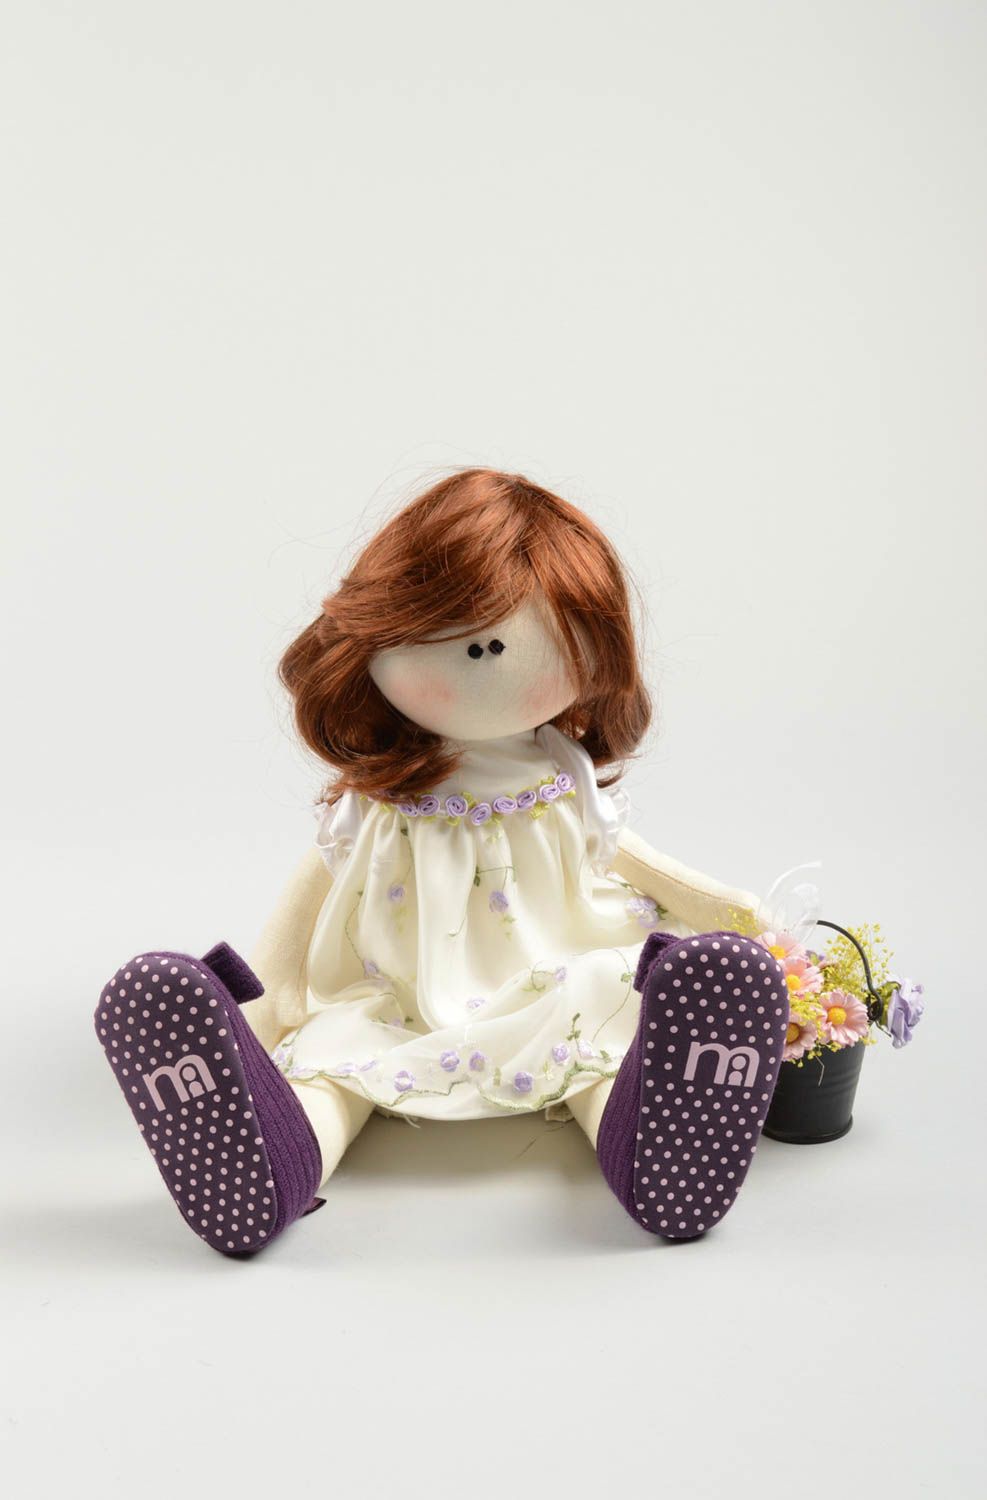 Beautiful handmade rag doll best toys for kids room decor ideas gift ideas photo 3